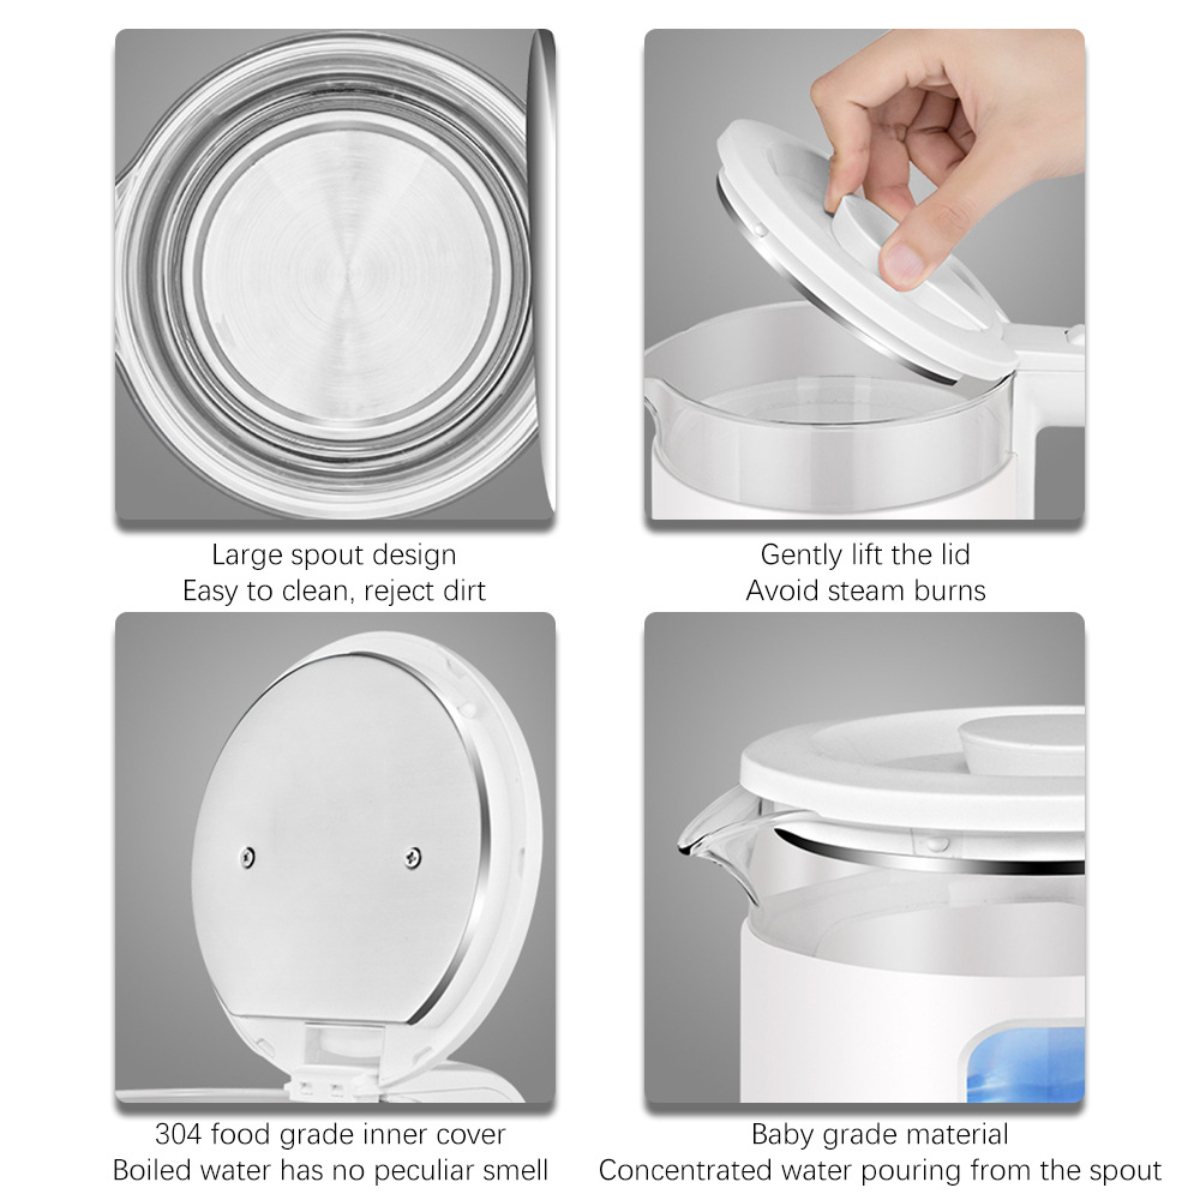 BYTELIKE Elektrischer Wasserkocher Glasfenster Anti-Trocken-Kochen schneller Weiß Wasserkocher, Kessel